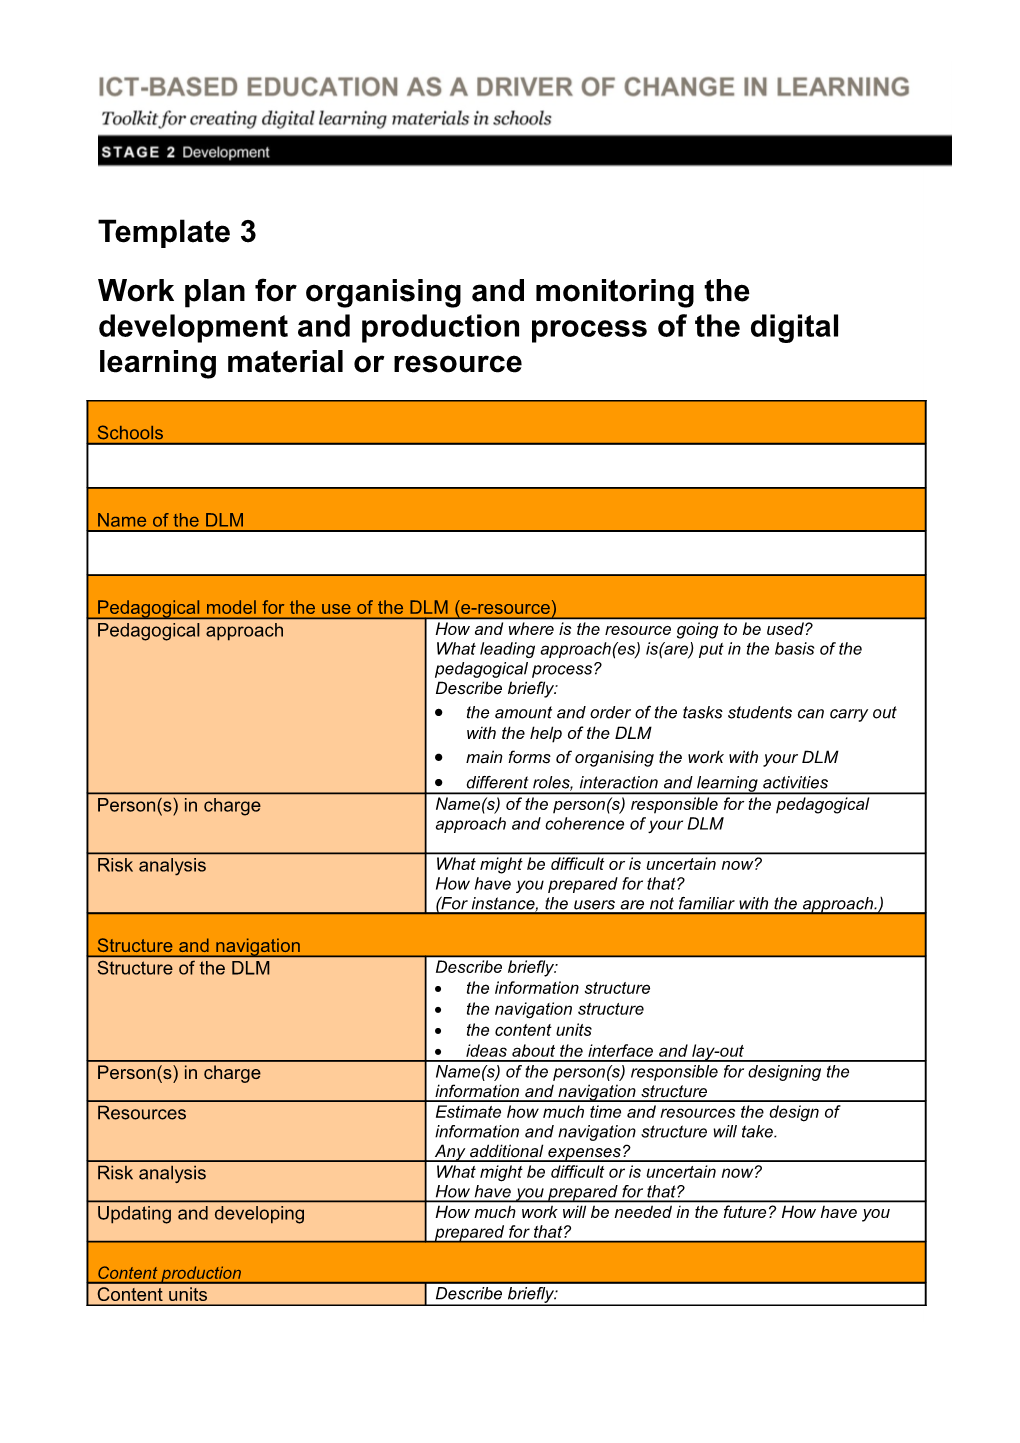 Workplanfororganisingandmonitoringthedevelopmentandproductionprocessofthe Digital Learning